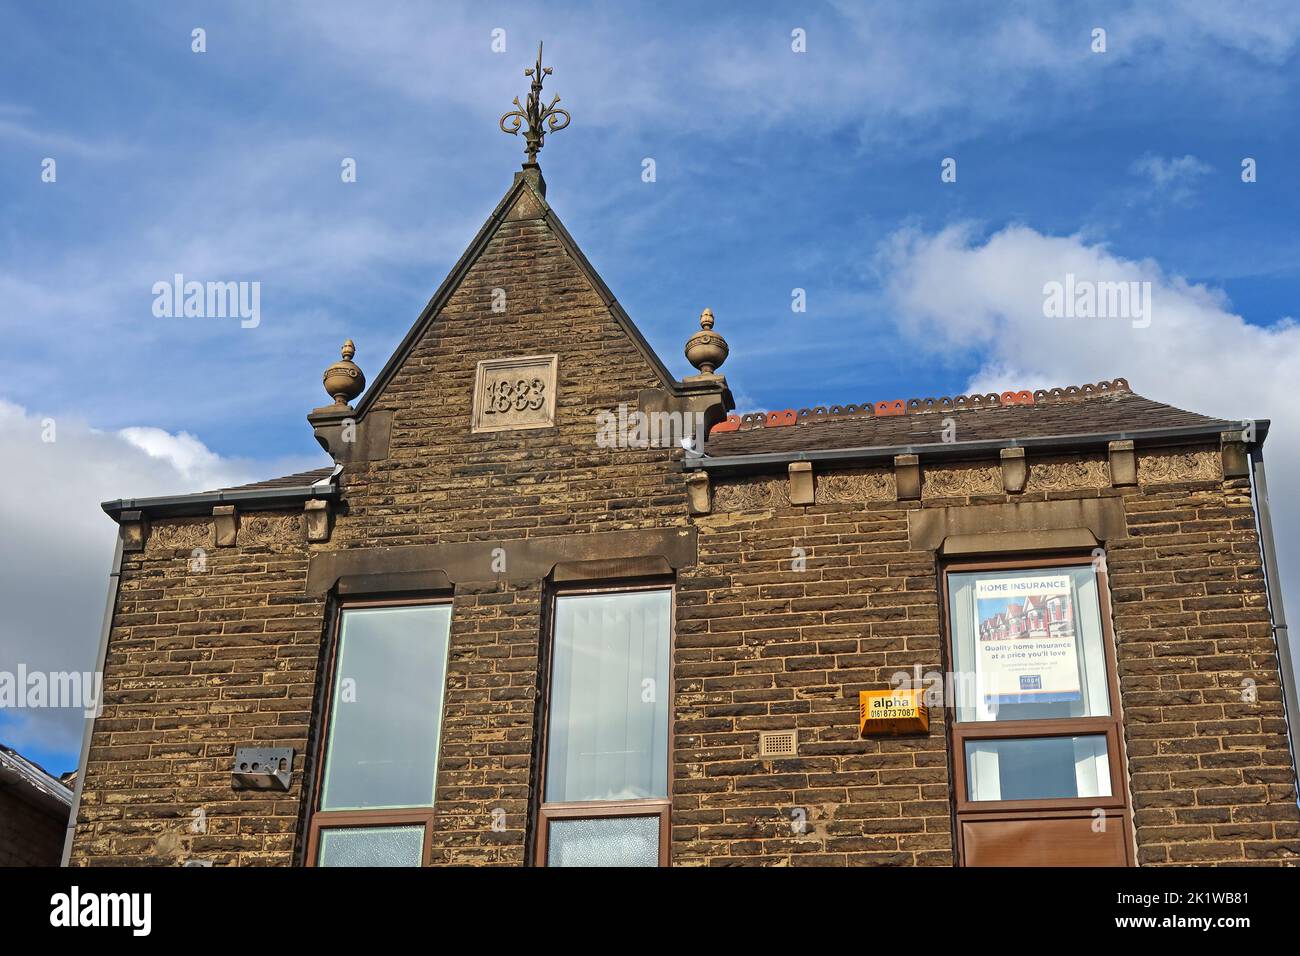 2 Howard St ,Glossop, Victorian building from 1883, High Peak, Derbys, England, UK, SK13 7DD Stock Photo